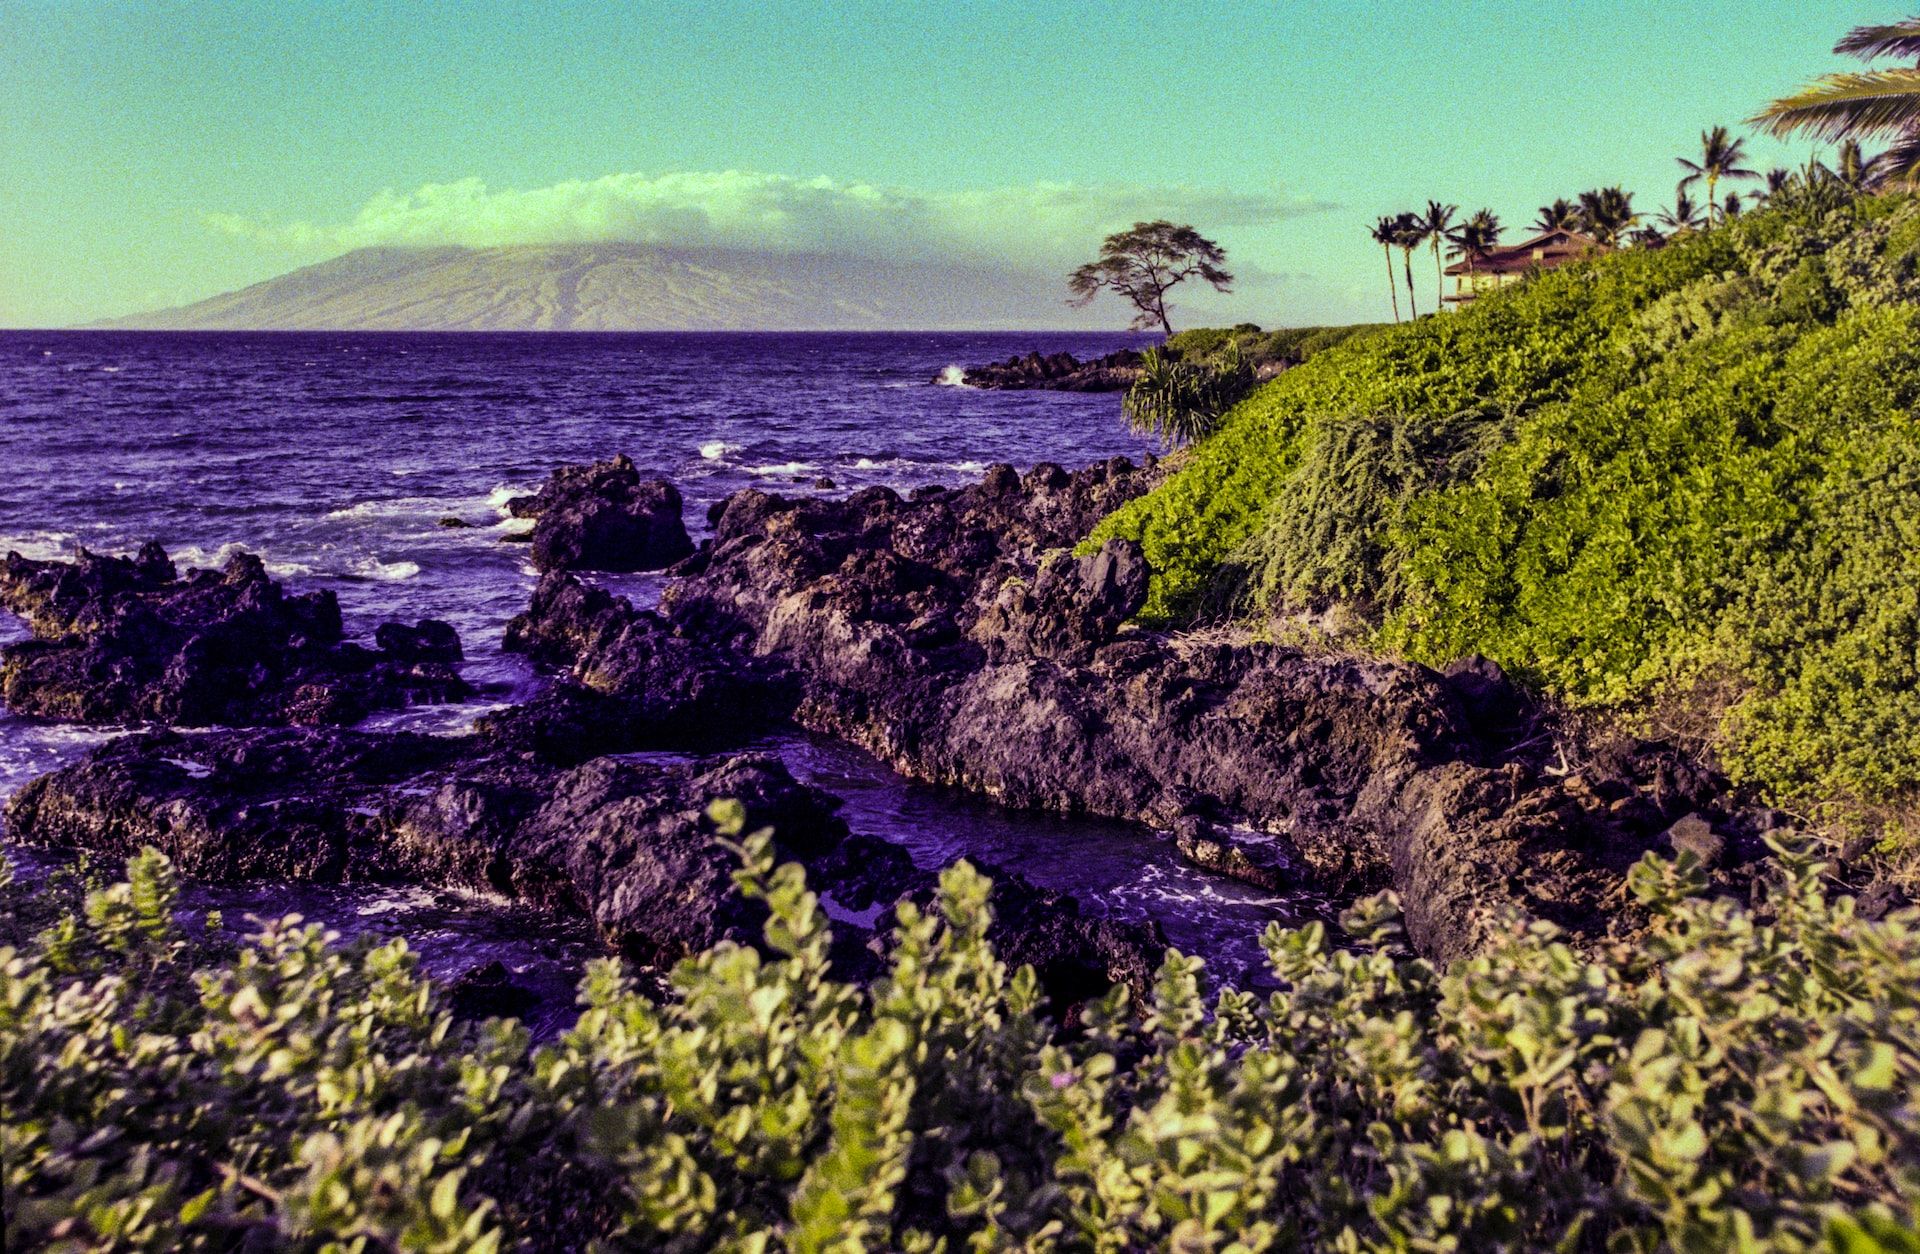 The rocky coast in Wailea, Maui